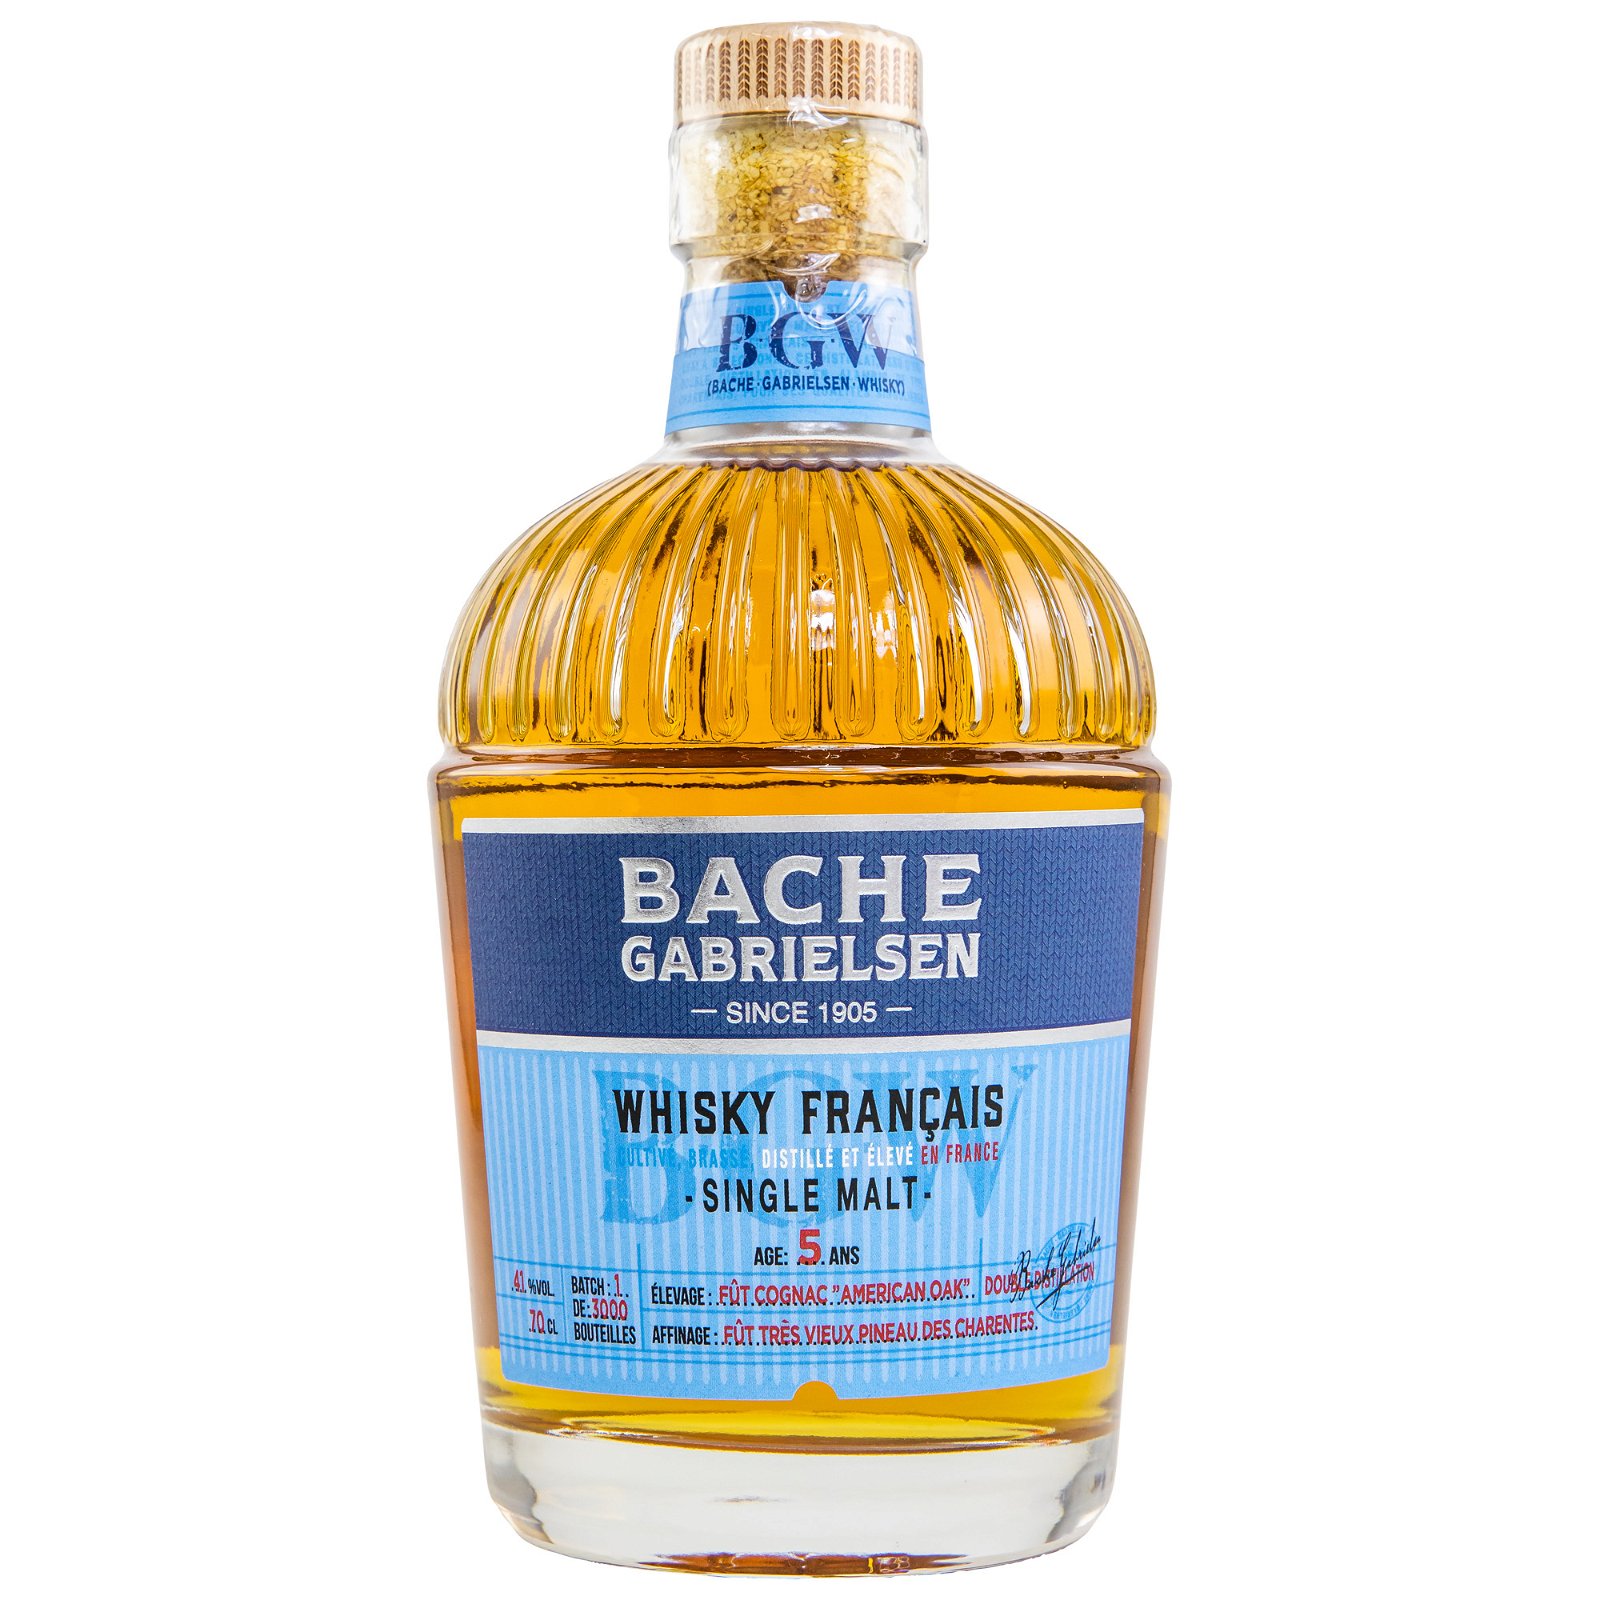 Bache-Gabrielsen 5 Jahre Cognac Cask BGW Batch #1